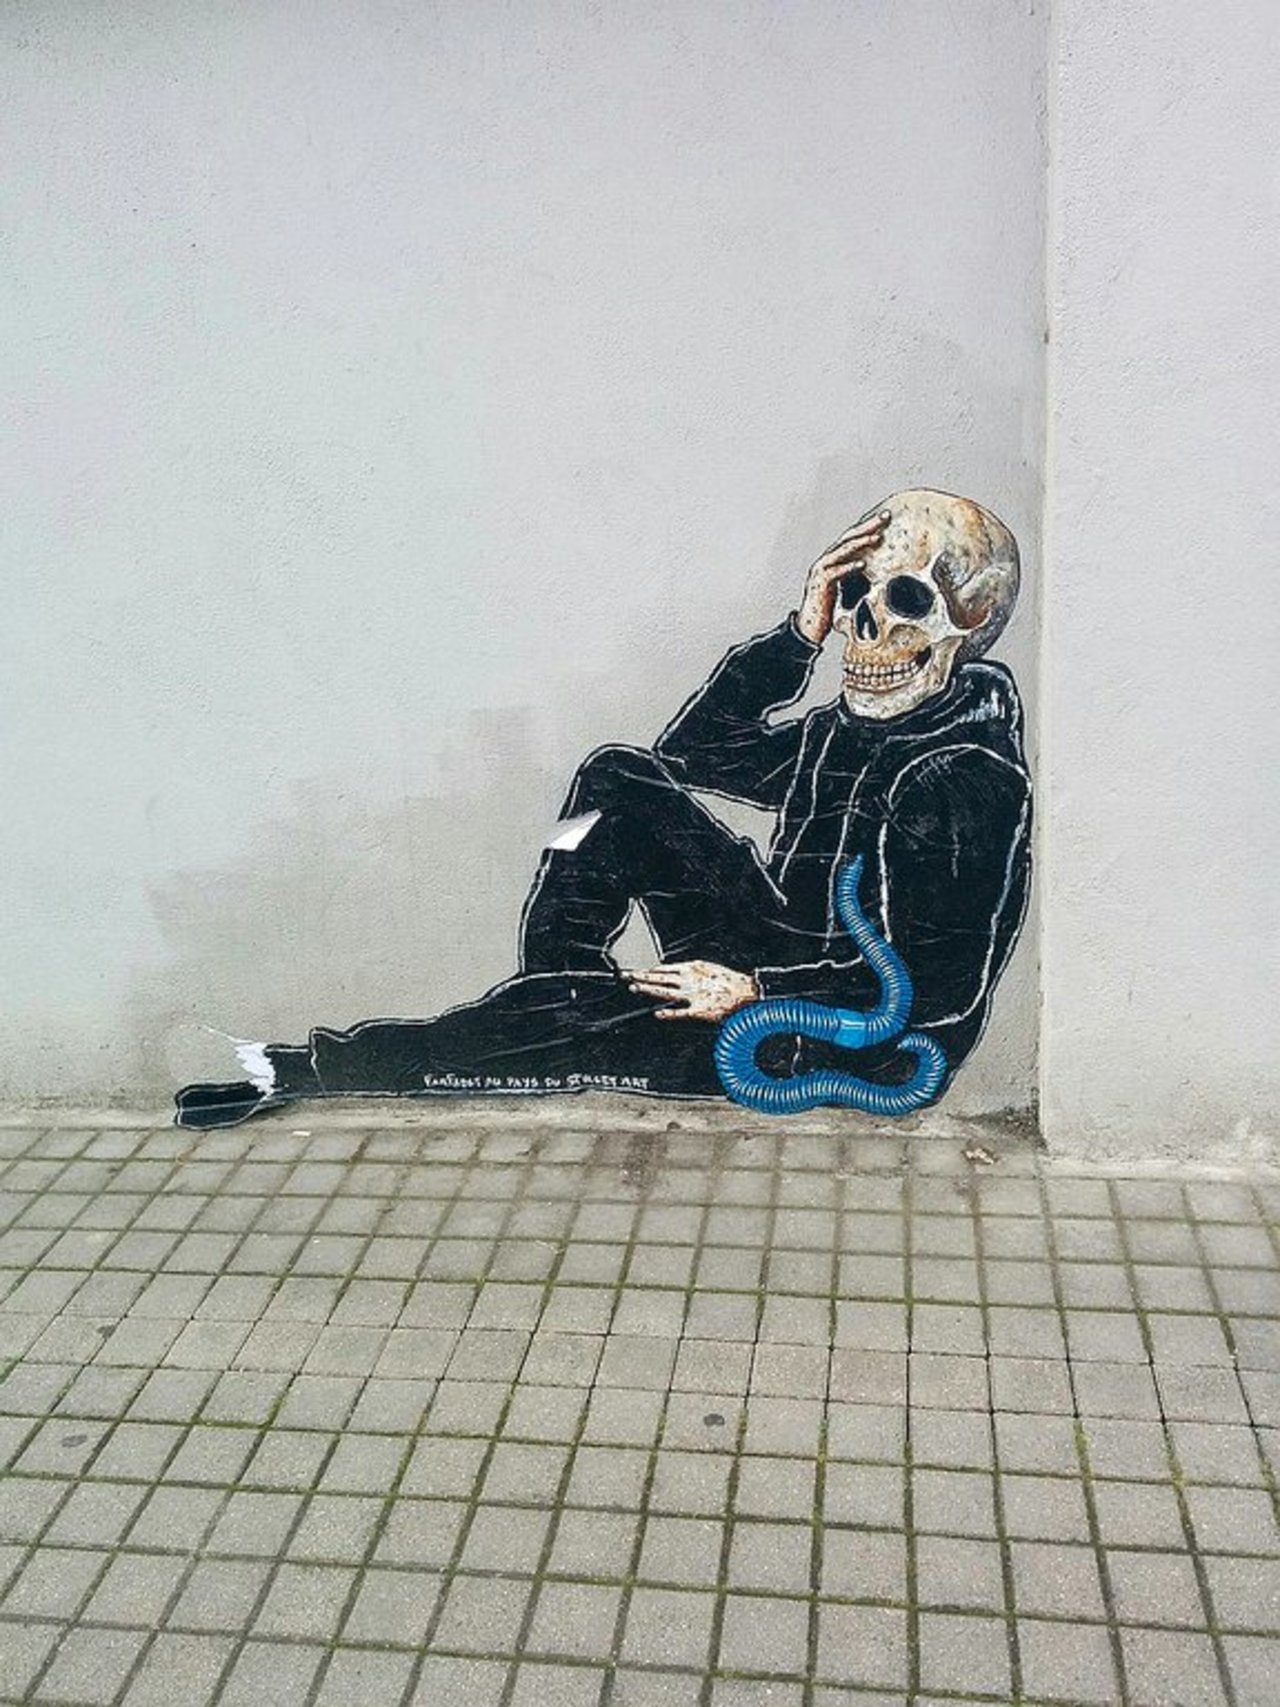 RT @urbacolors: Street Art by anonymous in #Nantes http://www.urbacolors.com #art #mural #graffiti #streetart https://t.co/UNpG8zH6bW